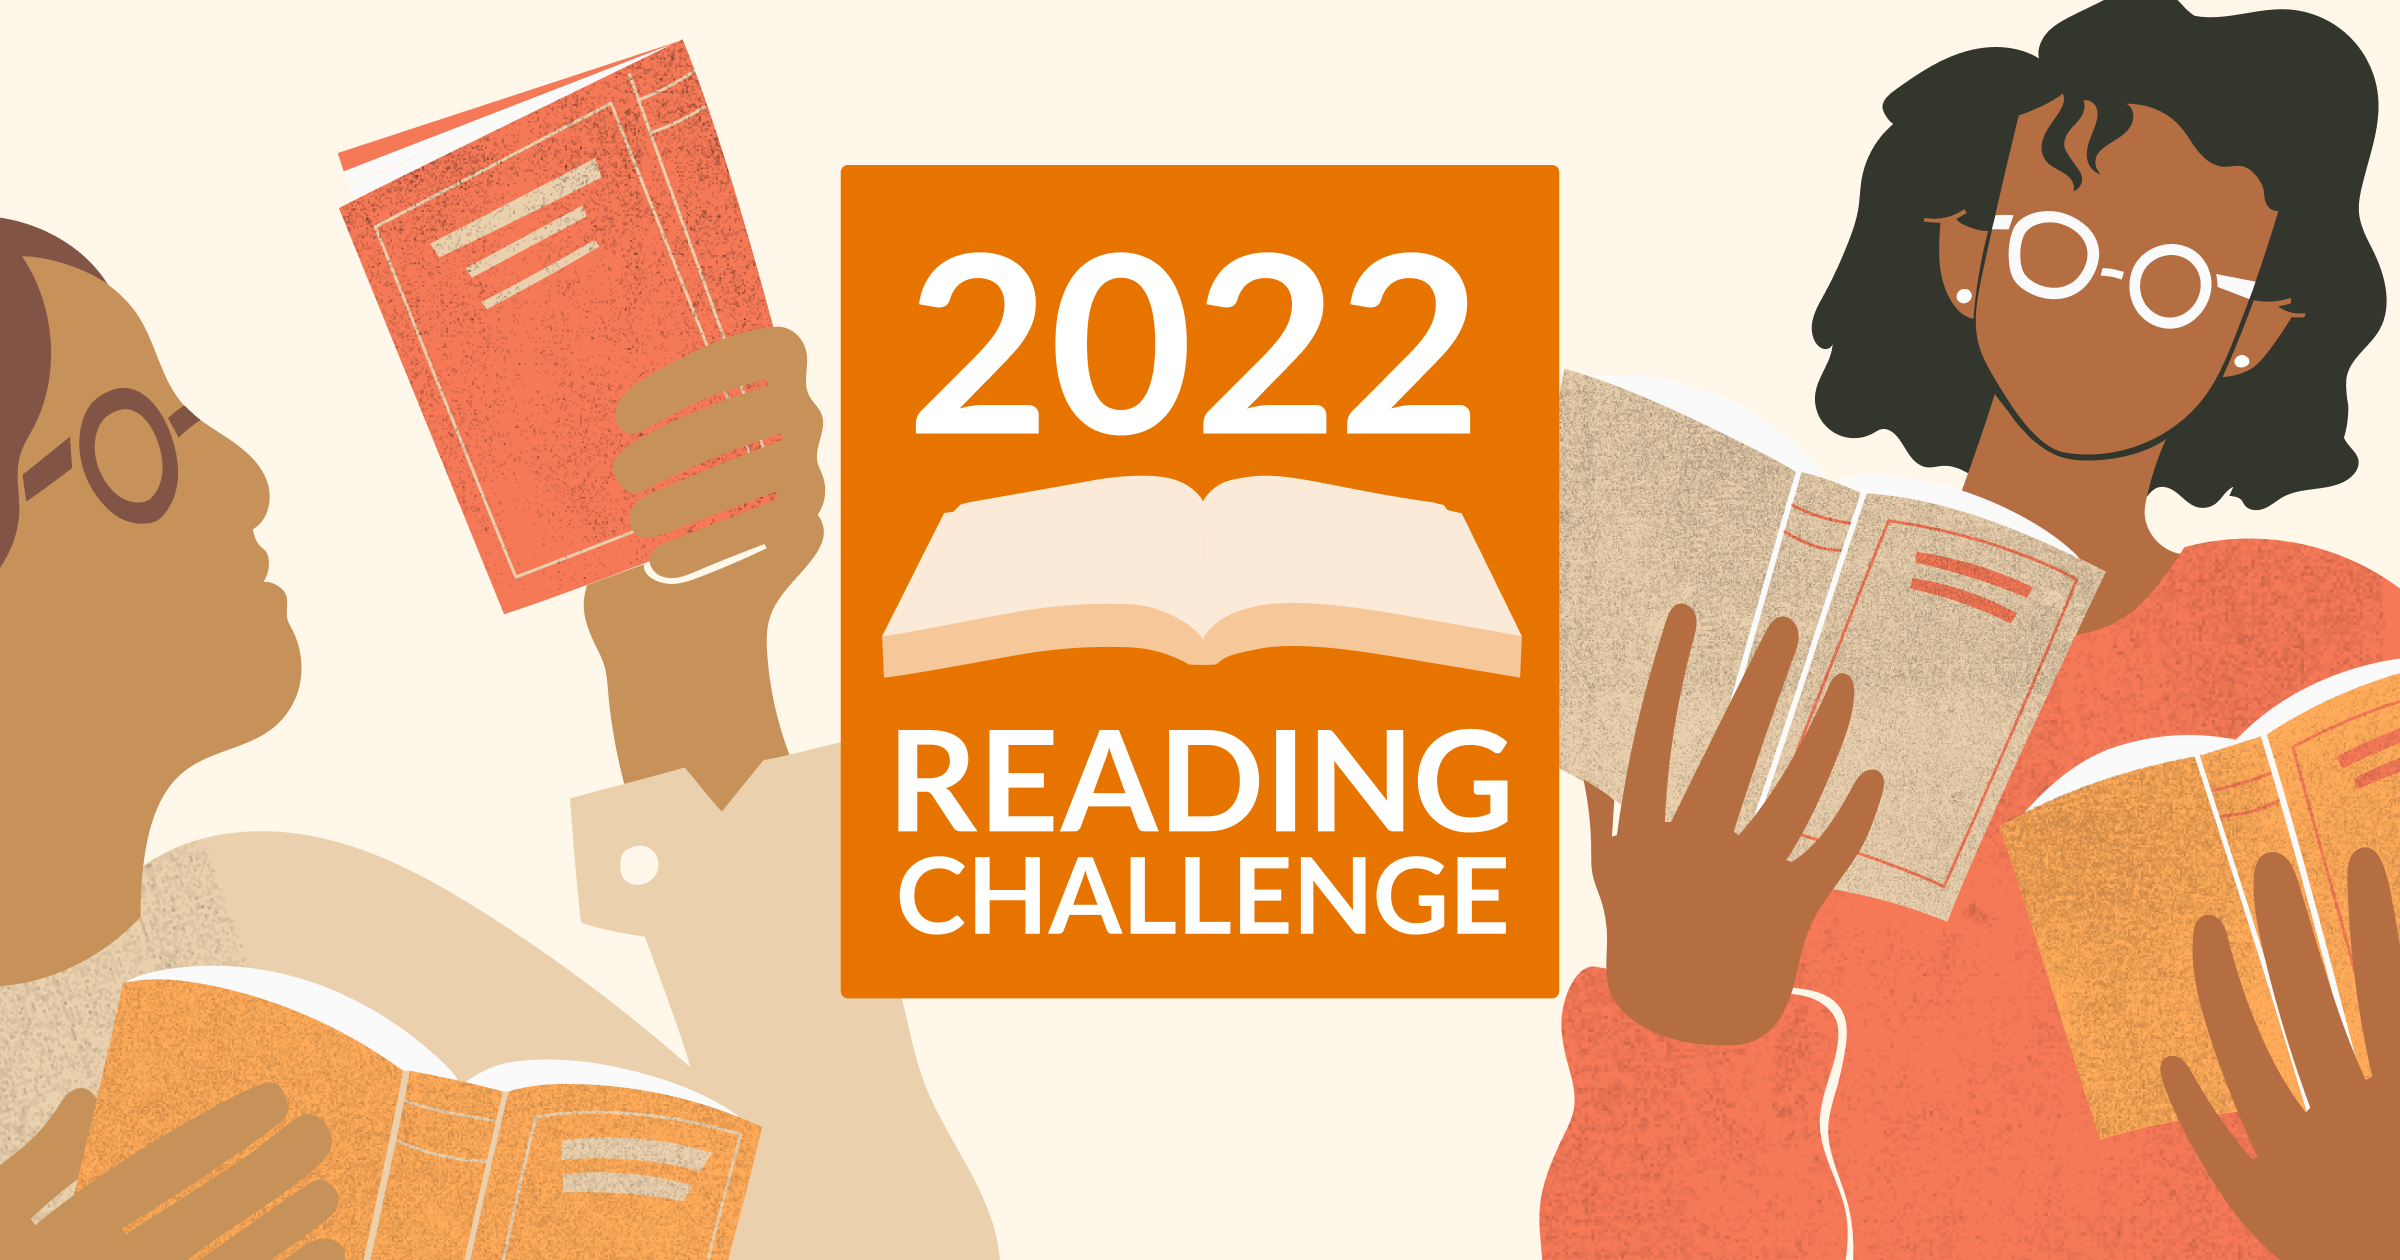 2022 Goodreads Reading Challenge